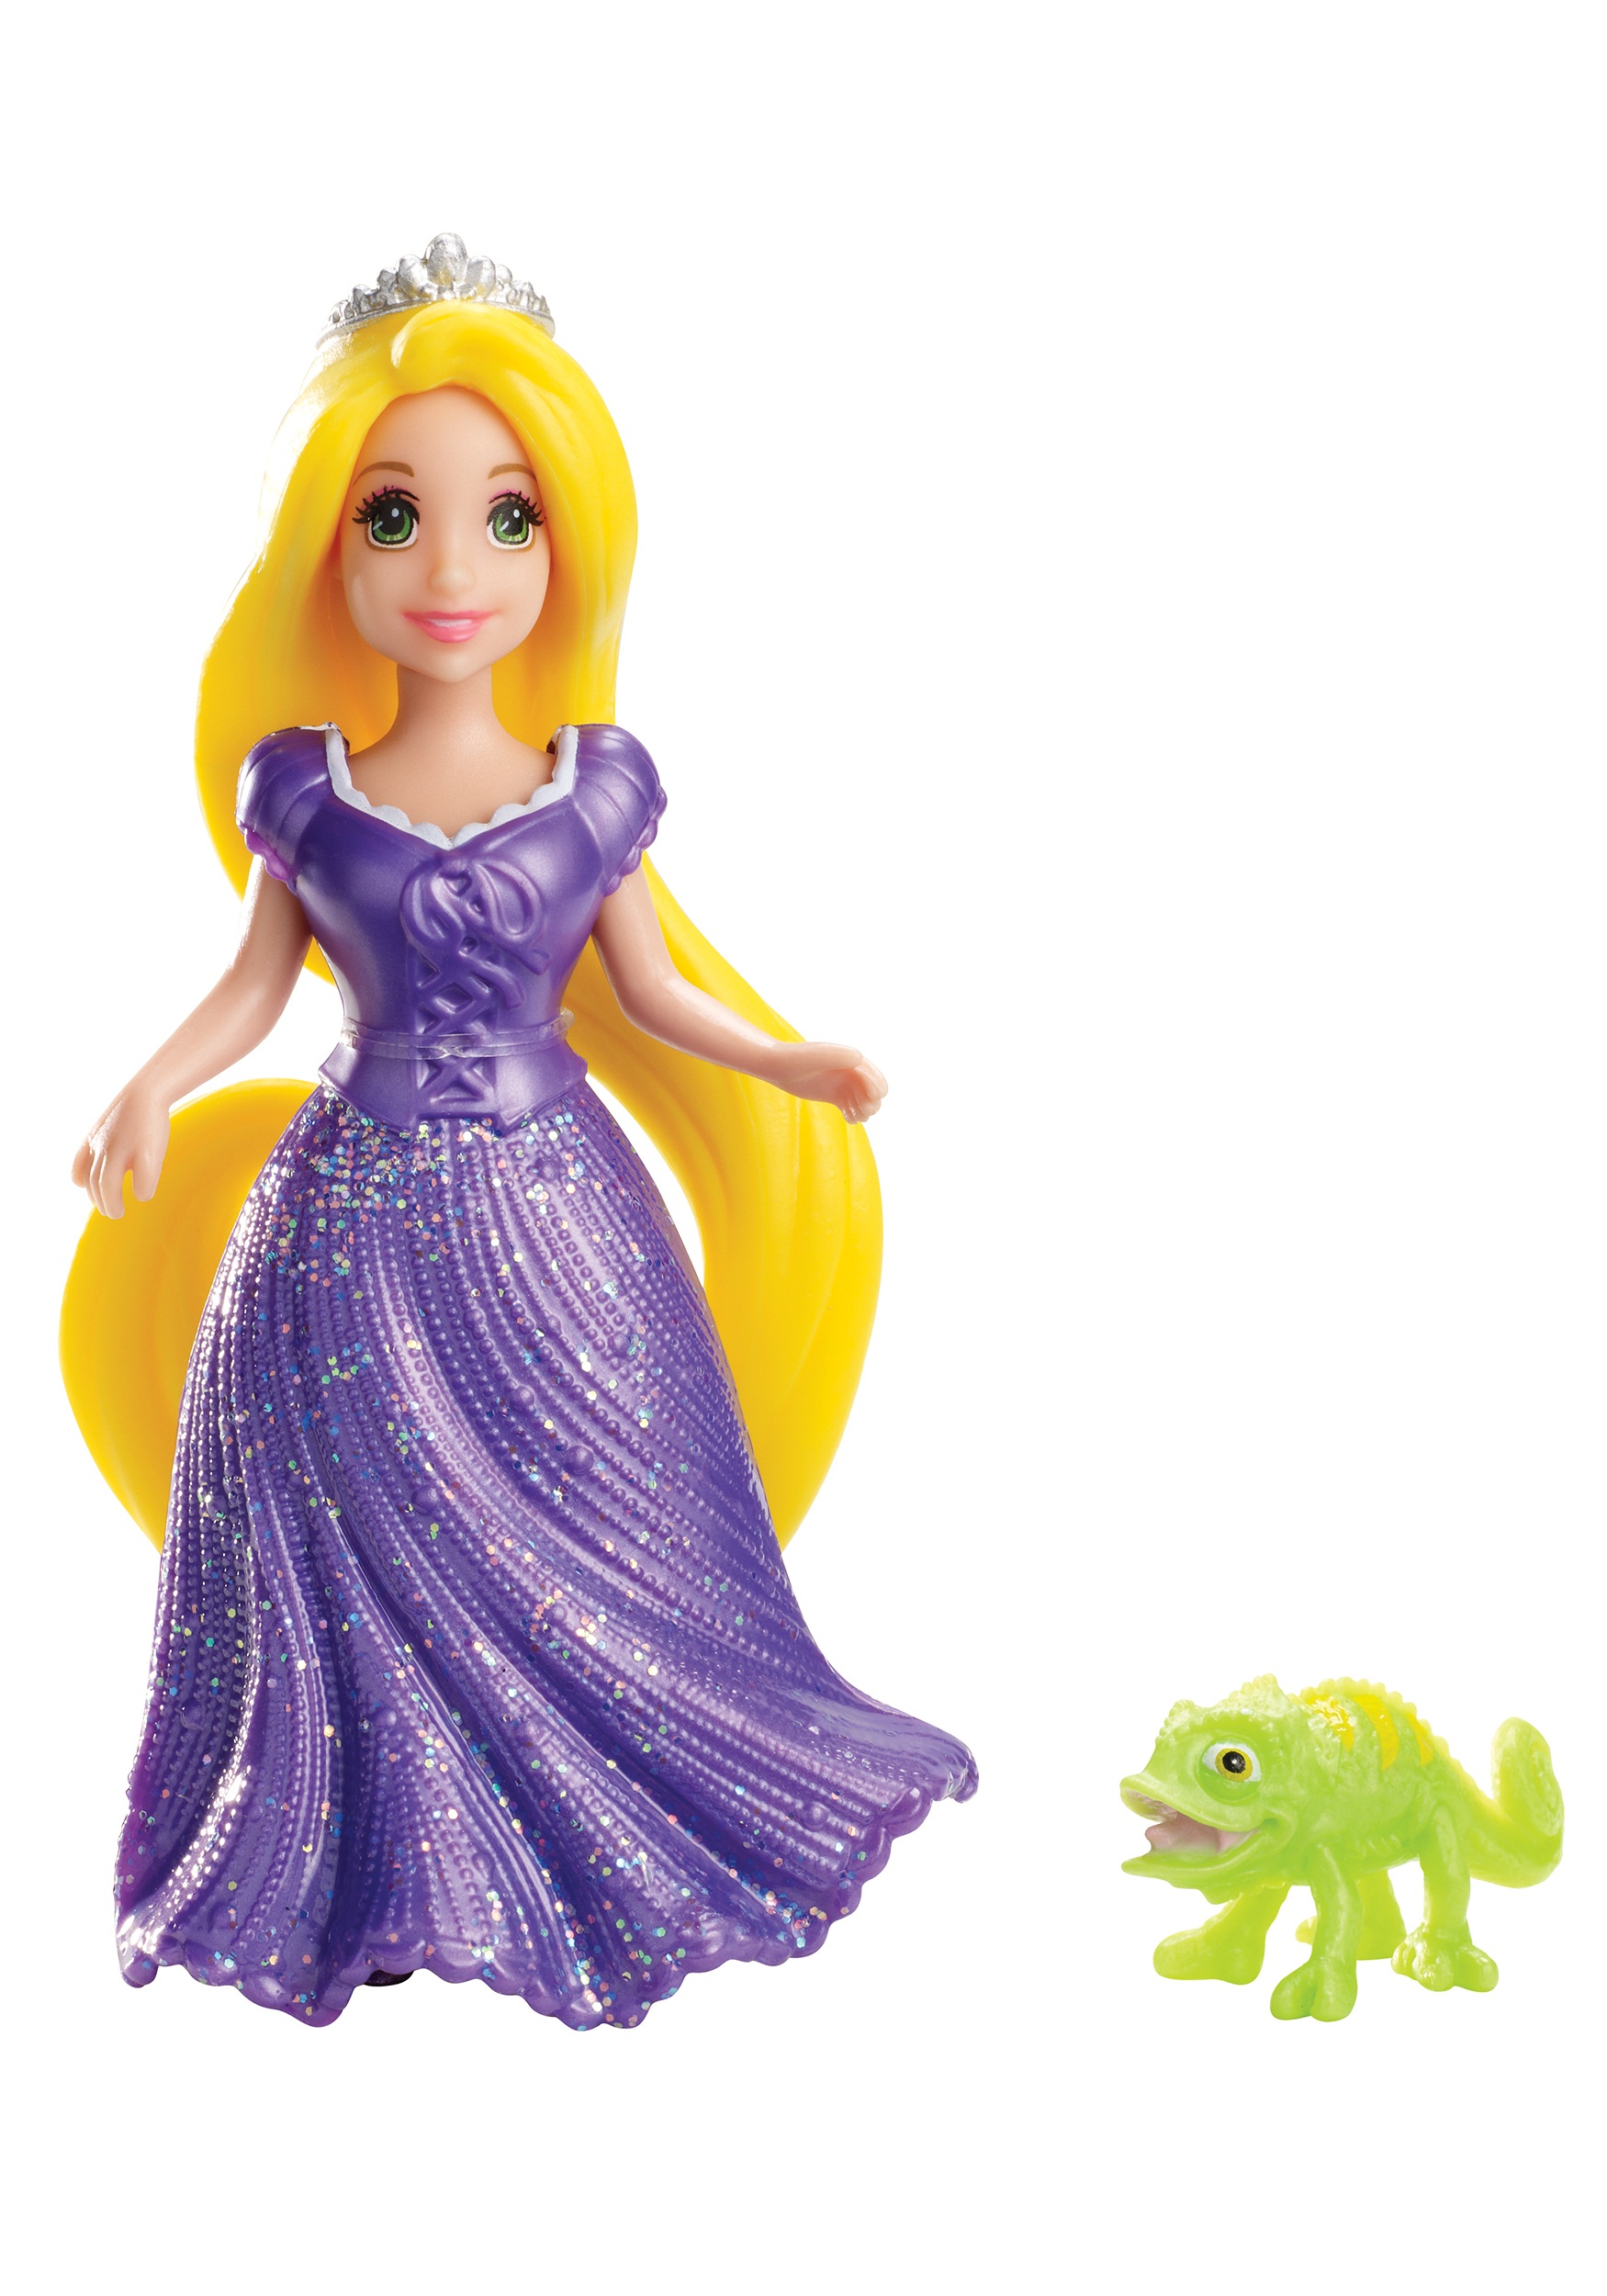 Disney Princess Magiclip - Disney Princess Songs - Disney Princess Toys 